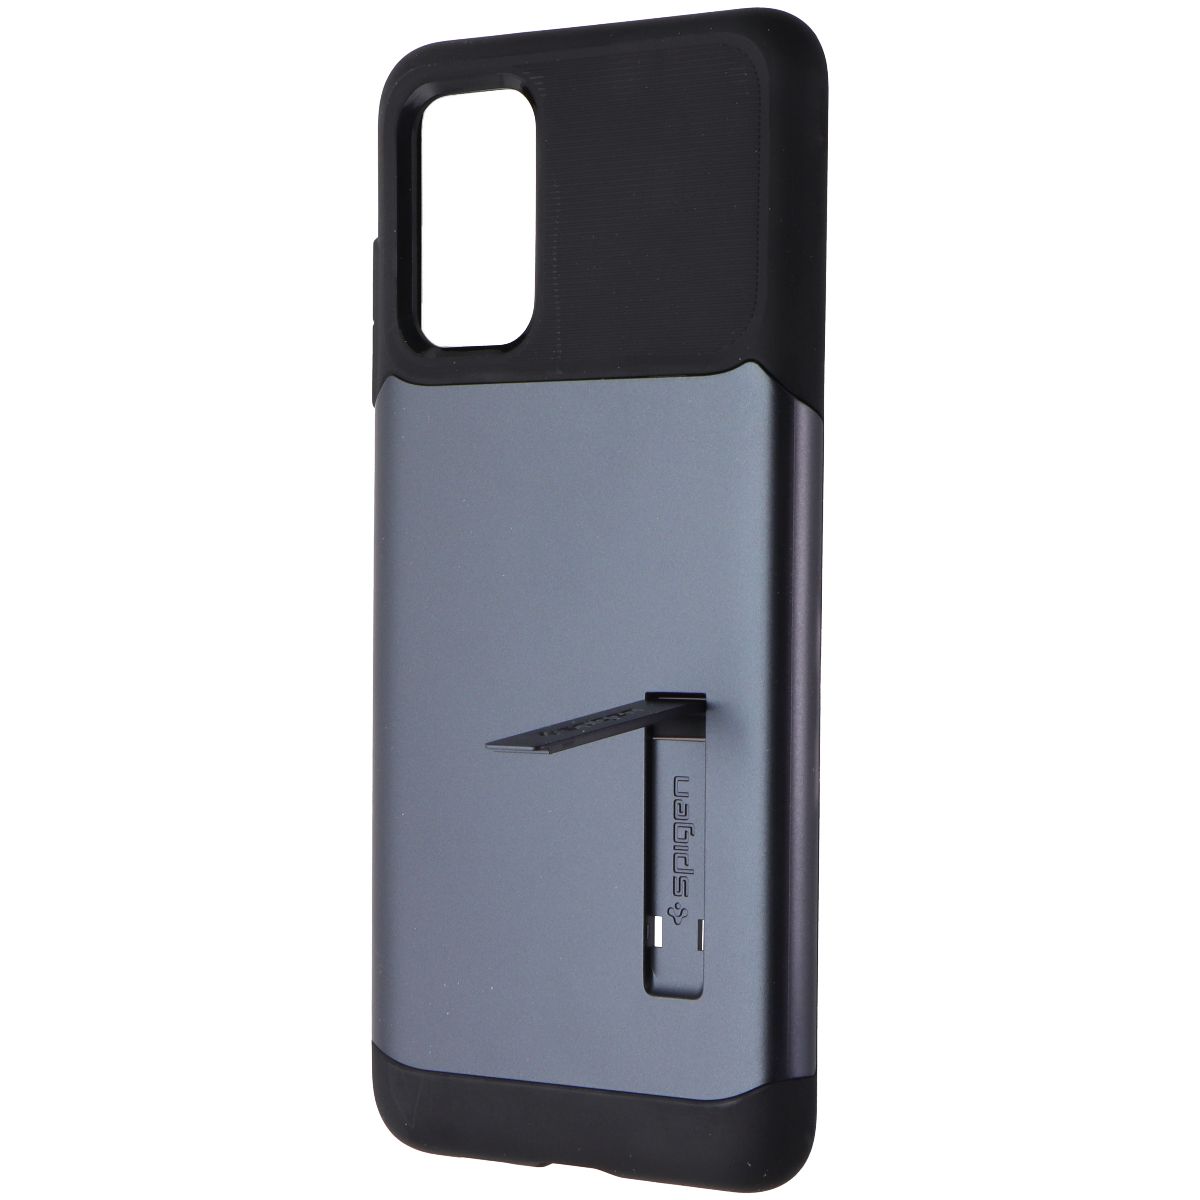 Spigen Slim Armor Designed for Samsung Galaxy S20 Plus Case (2020) - Metal Slate Cell Phone - Cases, Covers & Skins Spigen    - Simple Cell Bulk Wholesale Pricing - USA Seller